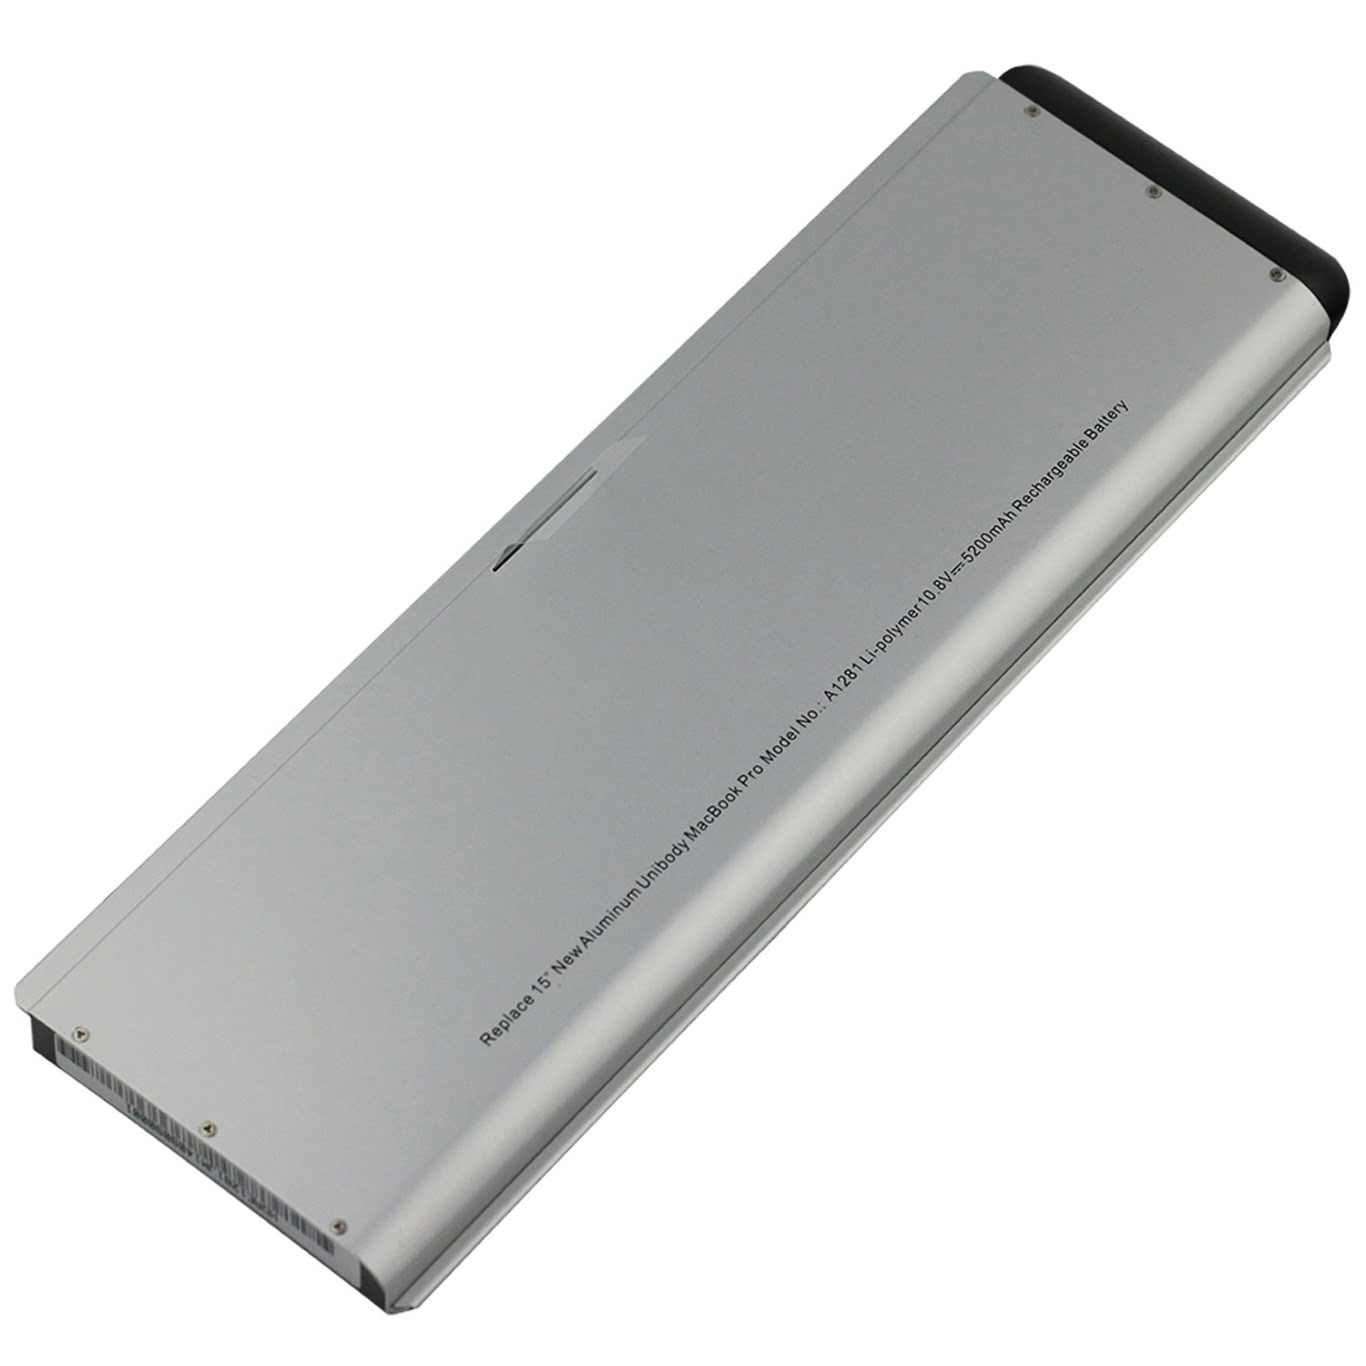 A1281, MB772 ersatz Laptop Akku fuer Apple MacBook Pro 15  A1286(2008 Version), MacBook Pro 15  Aluminum Unibody(2008 Version), 6 zellen, 10,8 V, 45wh